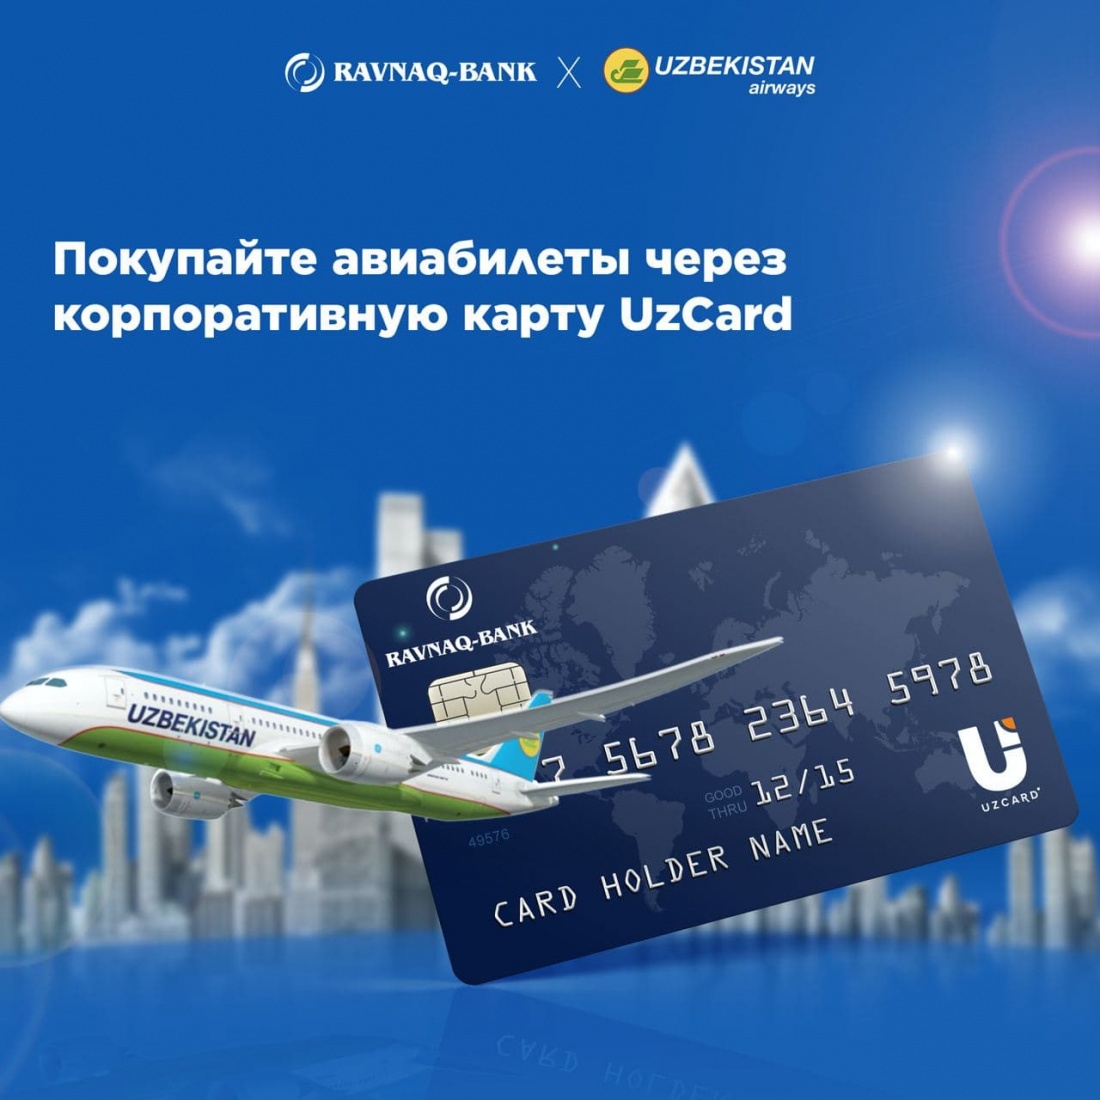 Покупайте авиабилеты через корпоративную карту UzCard.